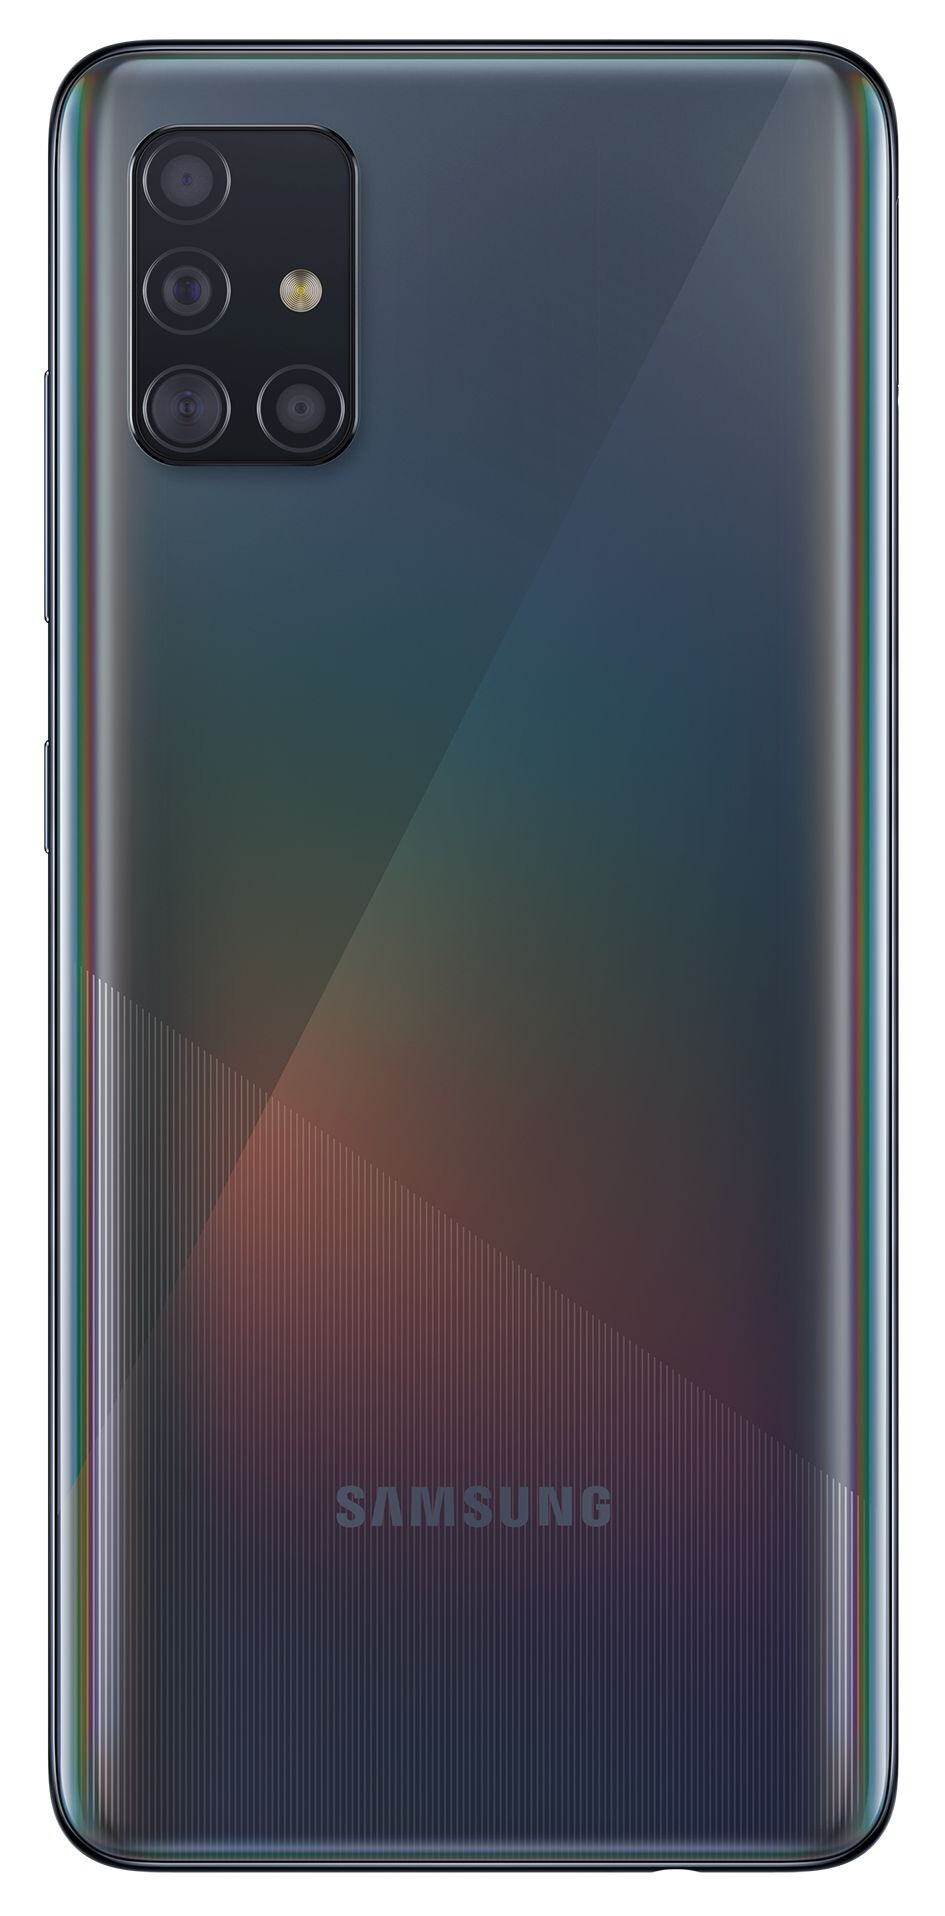 Смартфон Samsung Galaxy A51 4/64GB (ЕАС) Prism Crush Black (Черный)